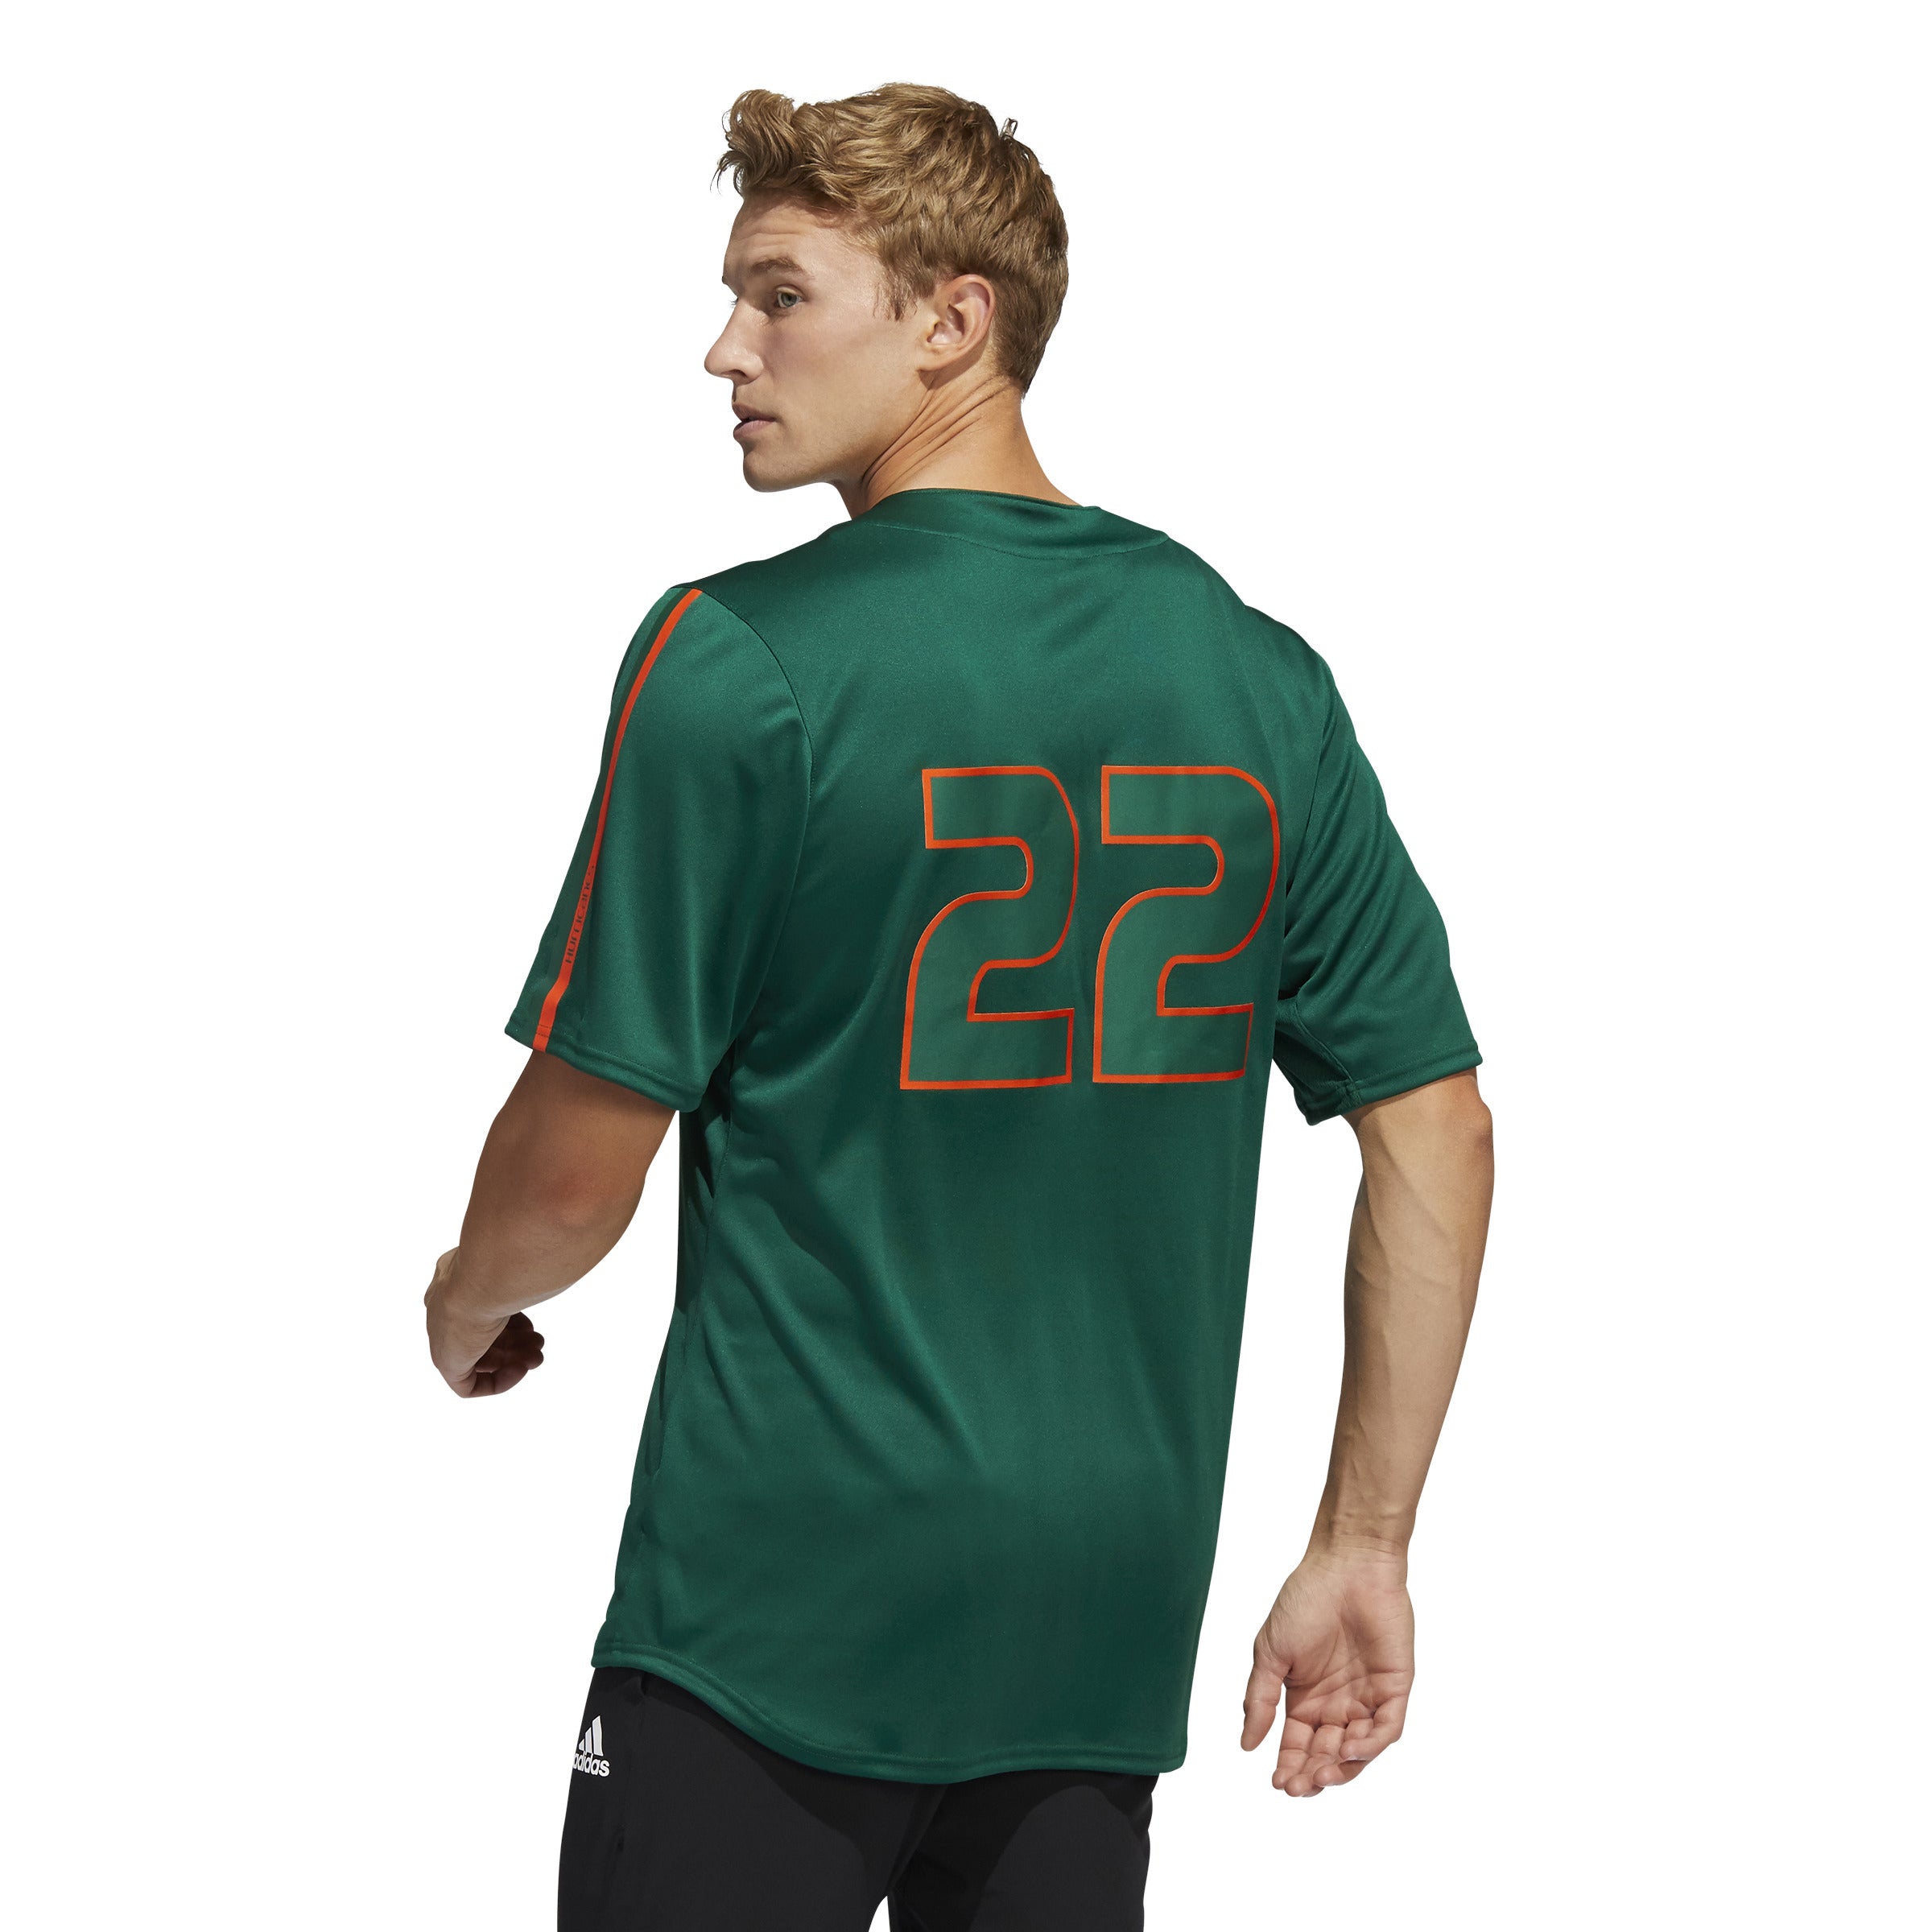 University Of Miami Baseball Uniforms Shop - www.bridgepartnersllc